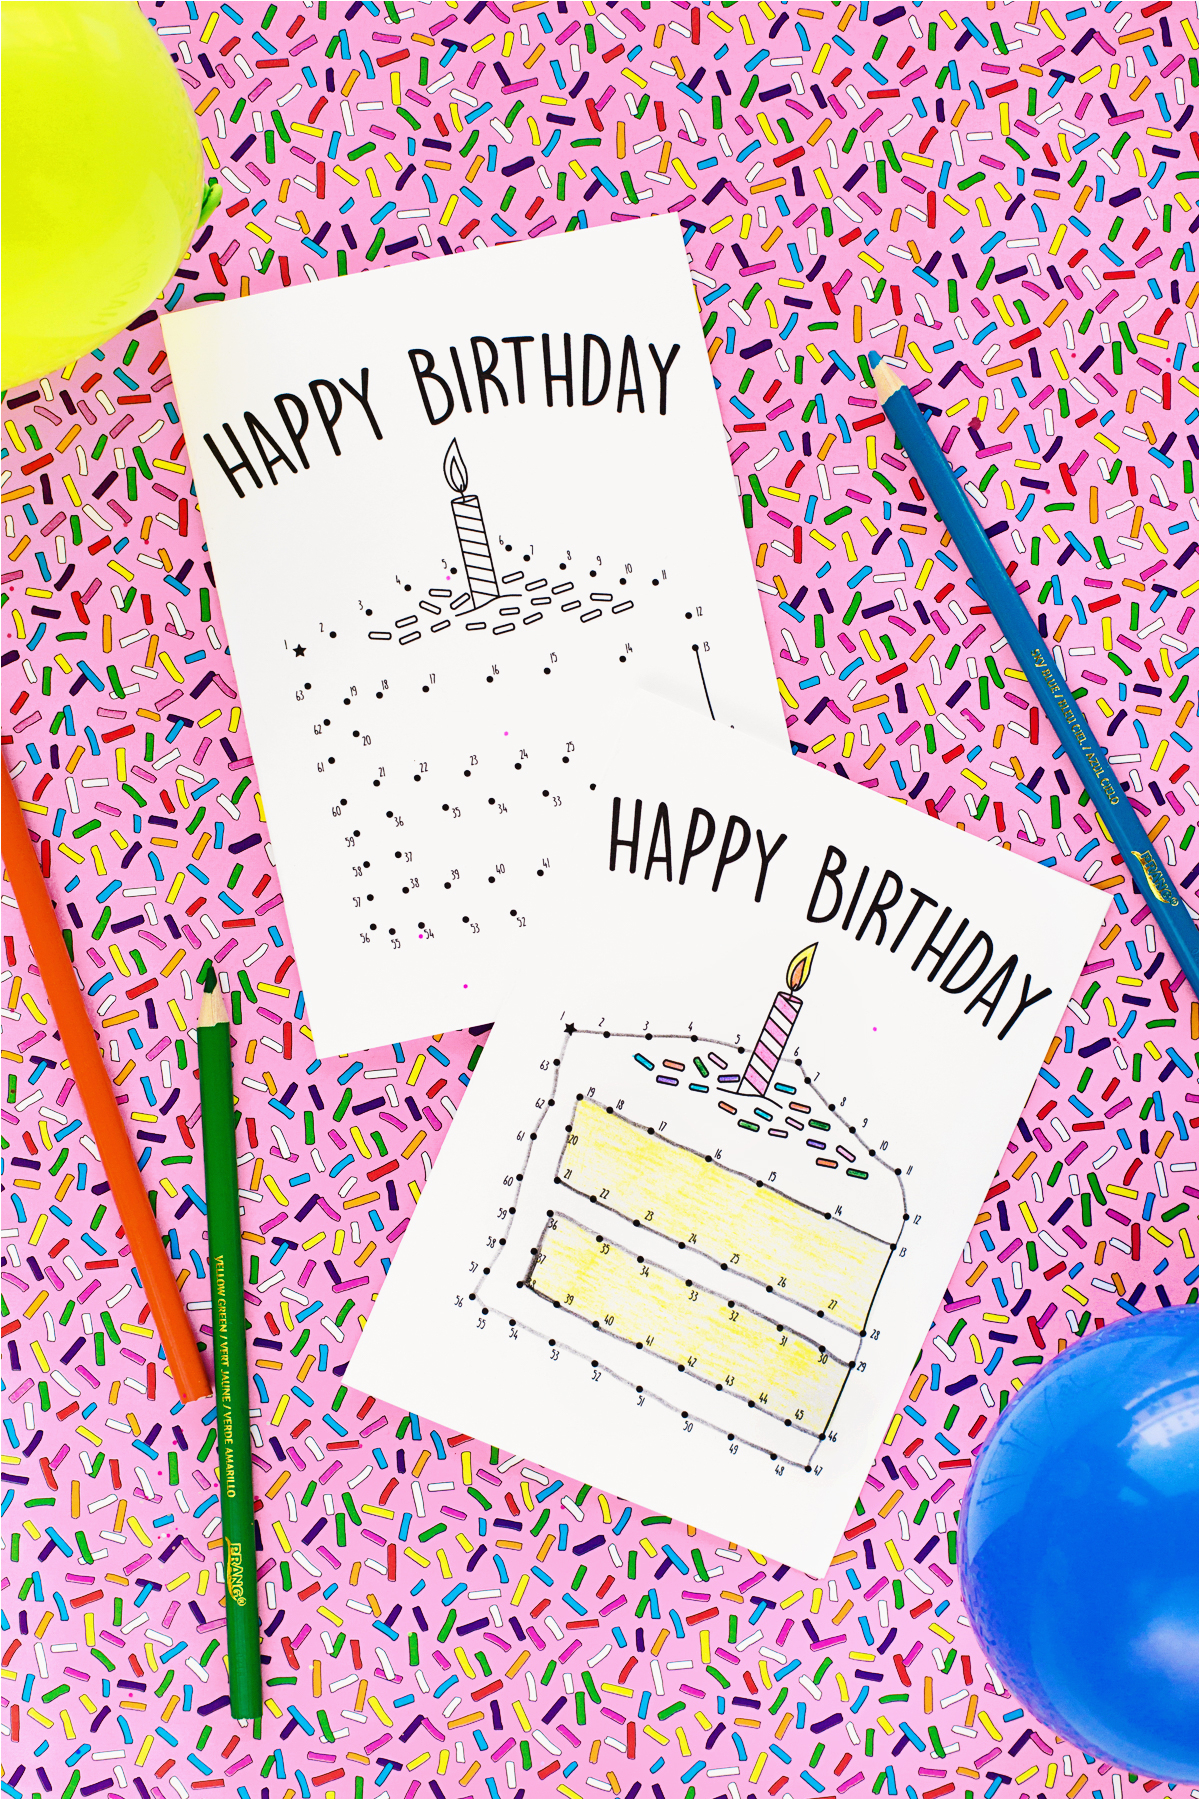 Free Printable Children S Birthday Cards Free Printable Birthday Cards for Kids Studio Diy